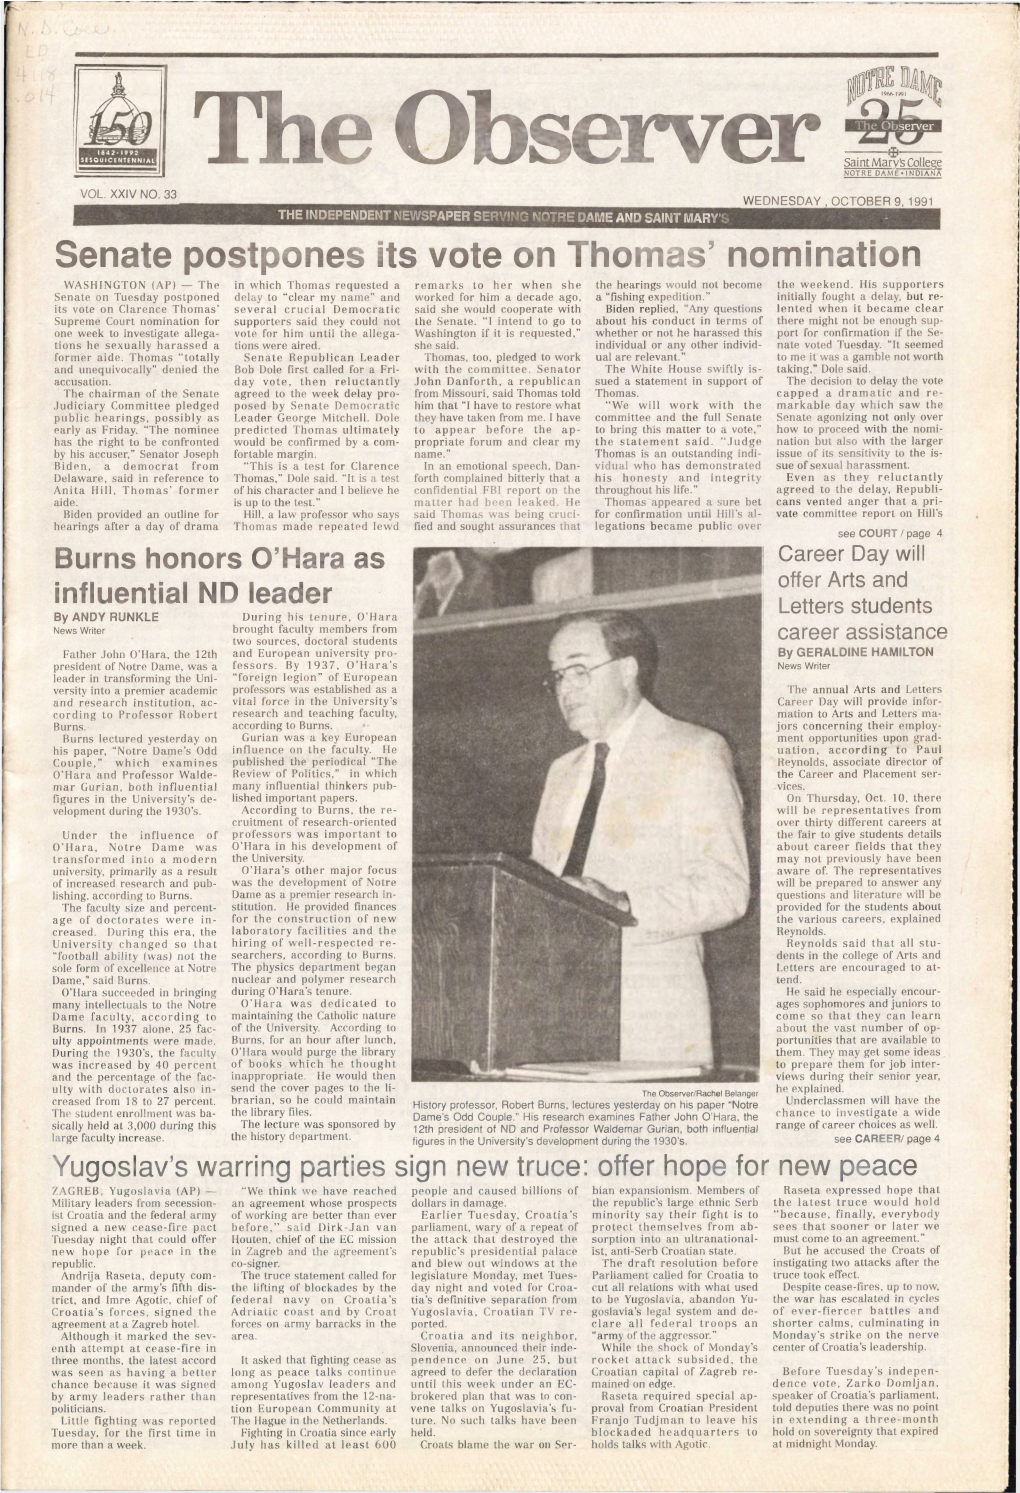 Senate Postpones Its Vote on Thomas' Nomination